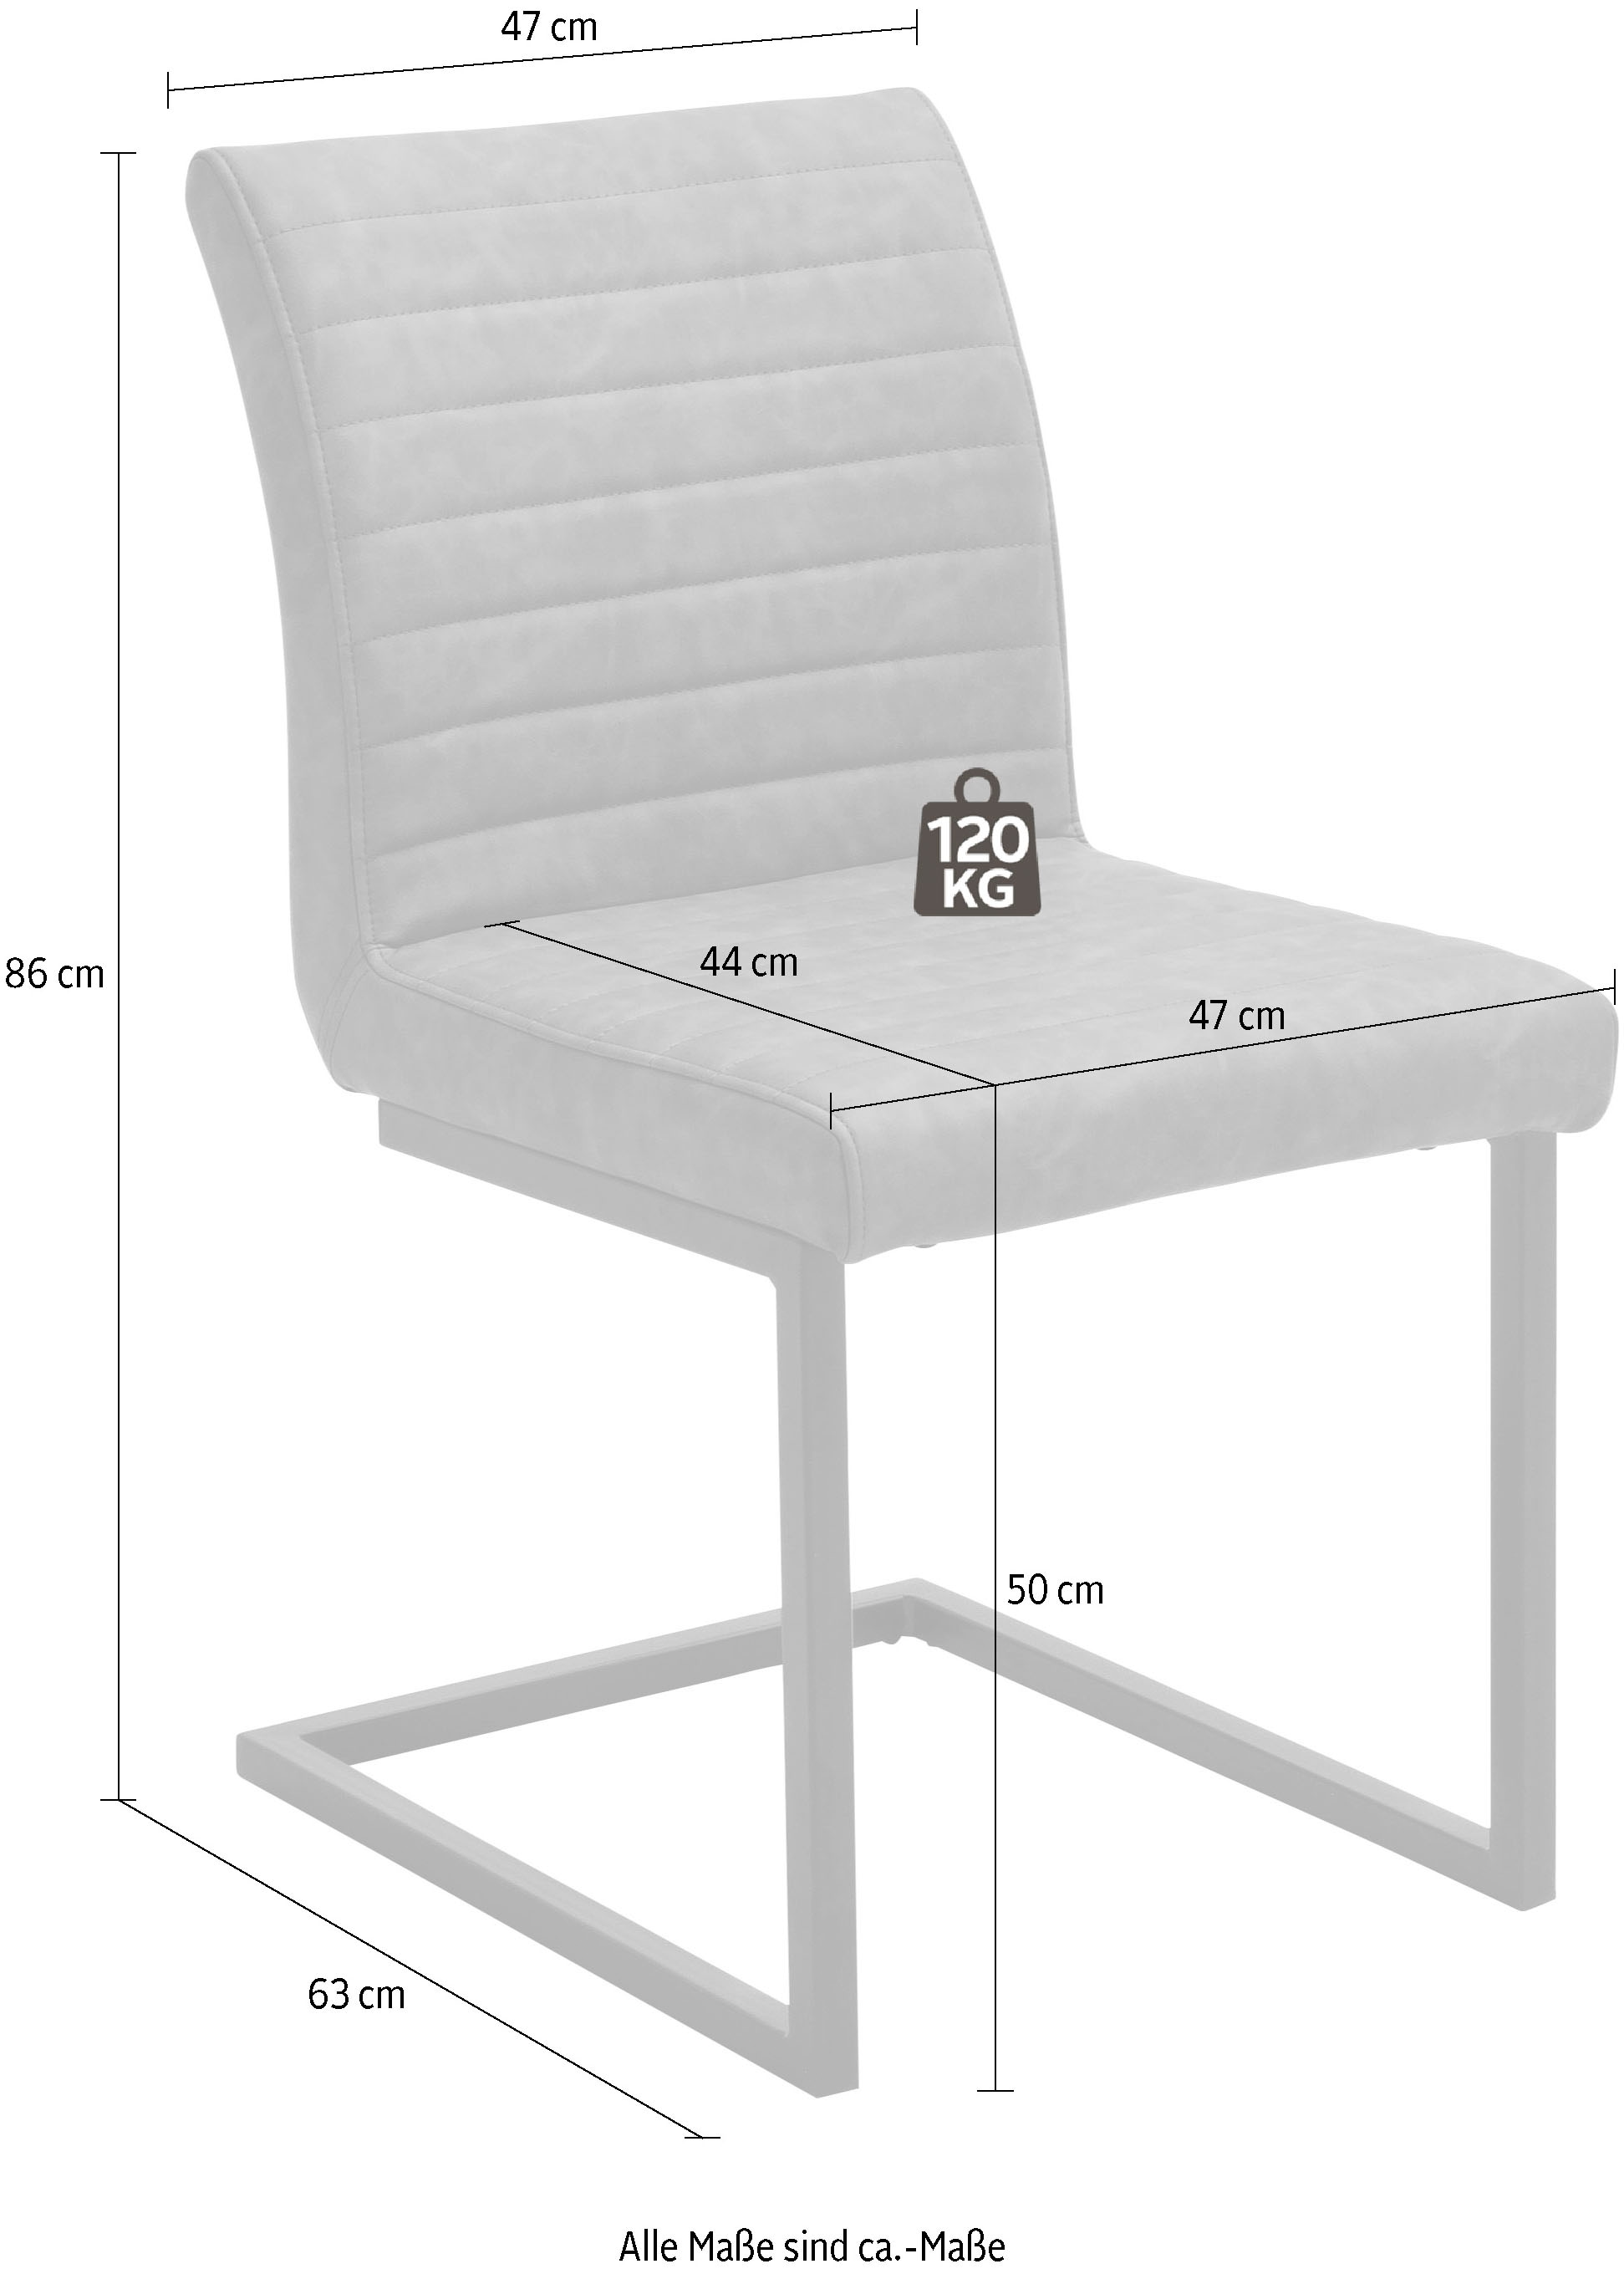 MCA furniture Esszimmerstuhl »Kian«, (Set), 2 St., Vintage Kunstleder mit  oder ohne Armlehne, Stuhl belastbar bis 120 kg bequem kaufen